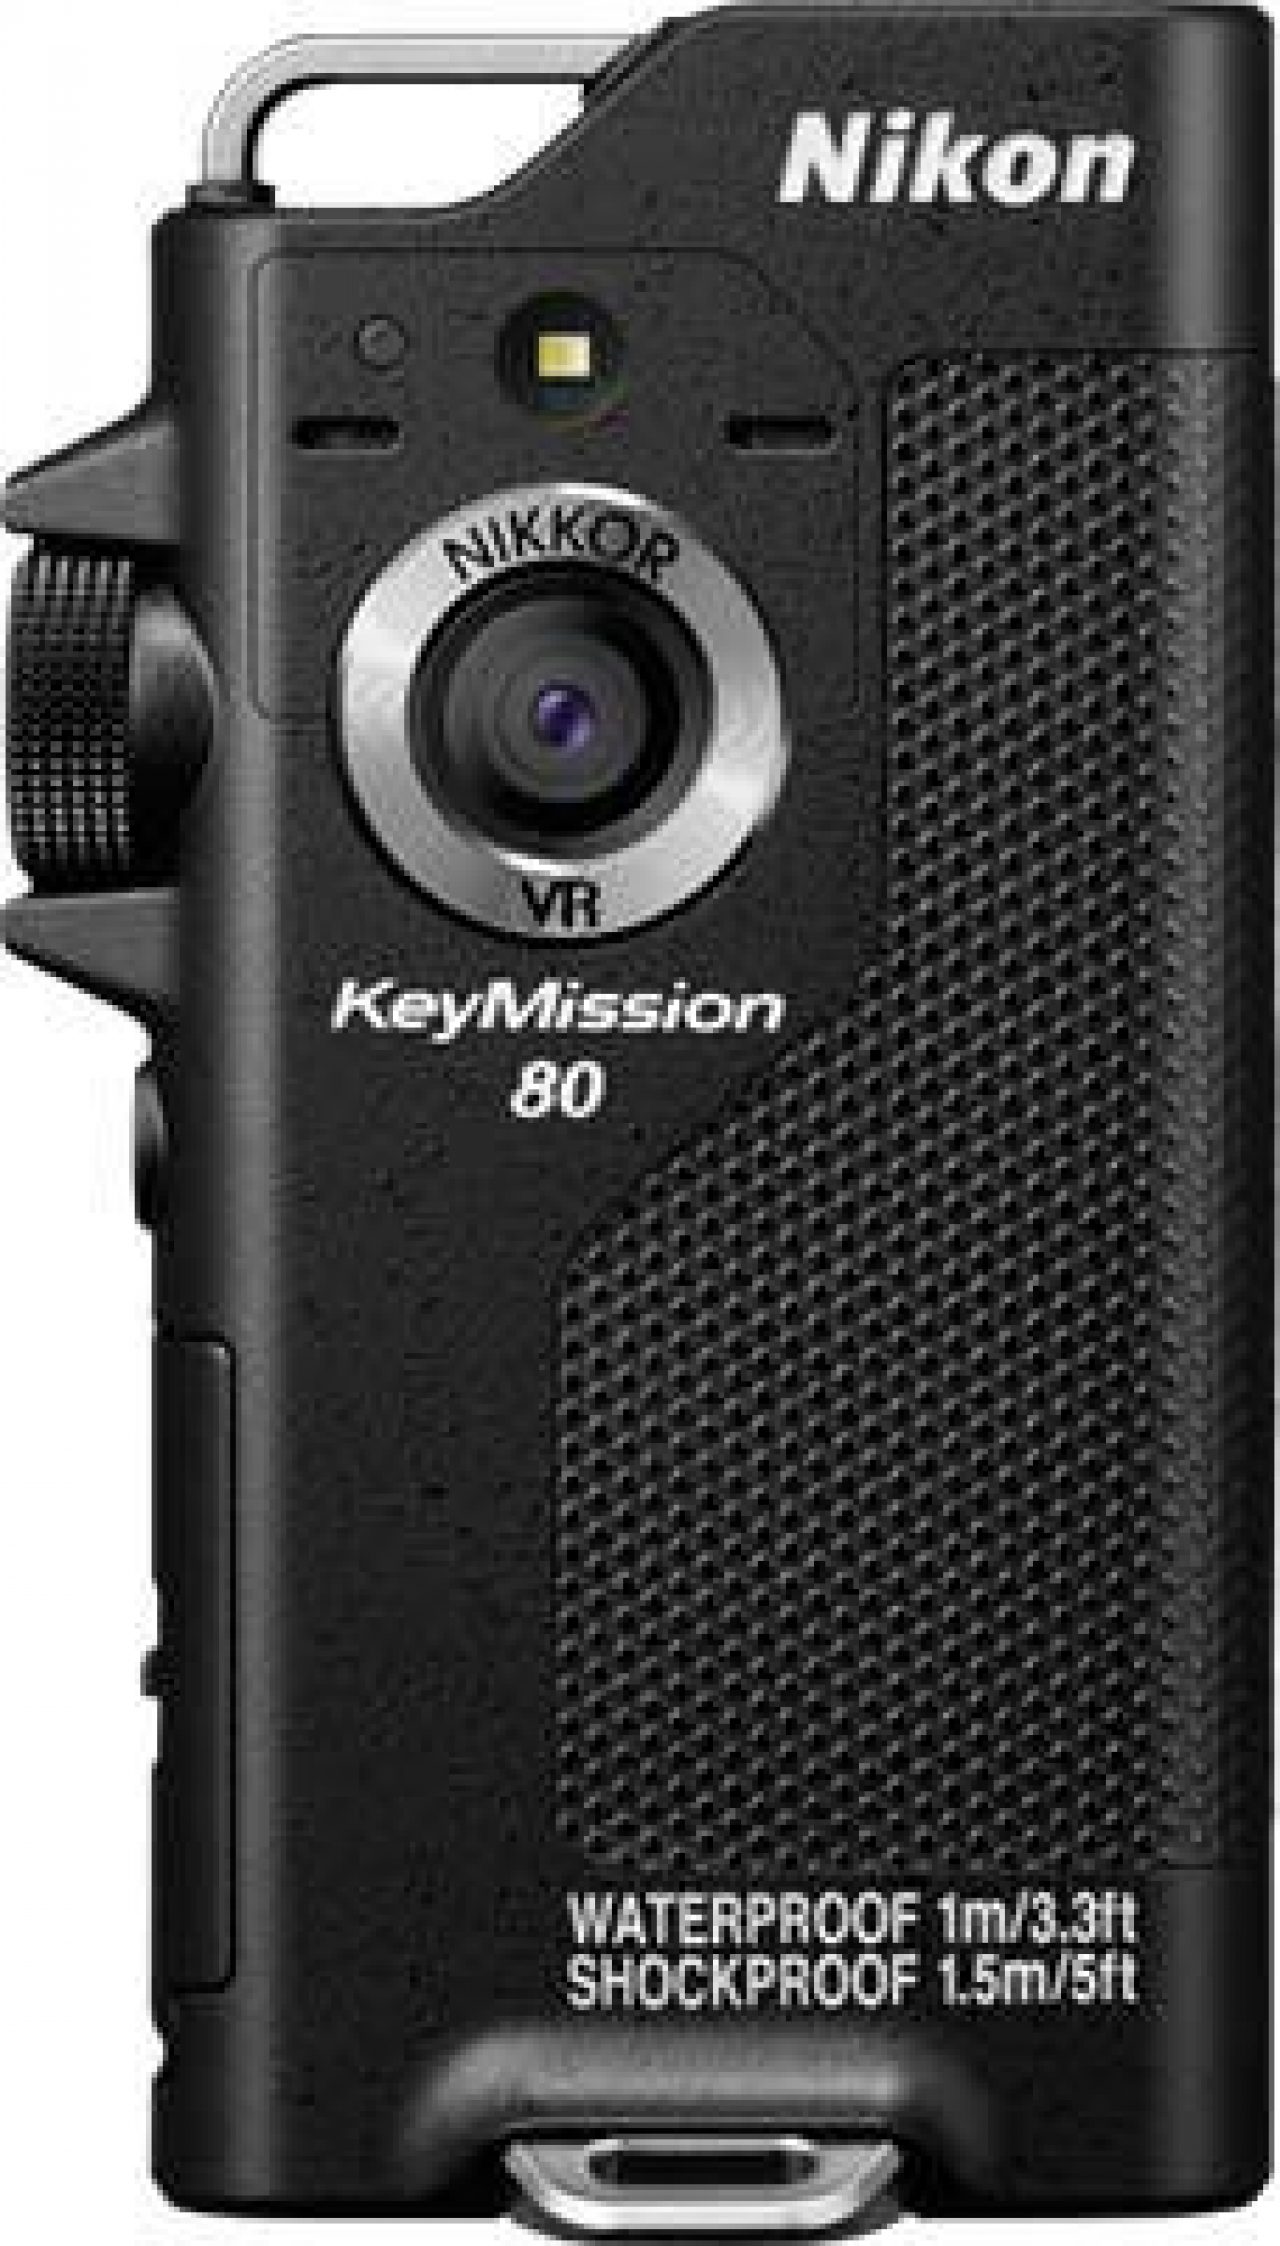 Nikon KeyMission 80 Review | Photography Blog